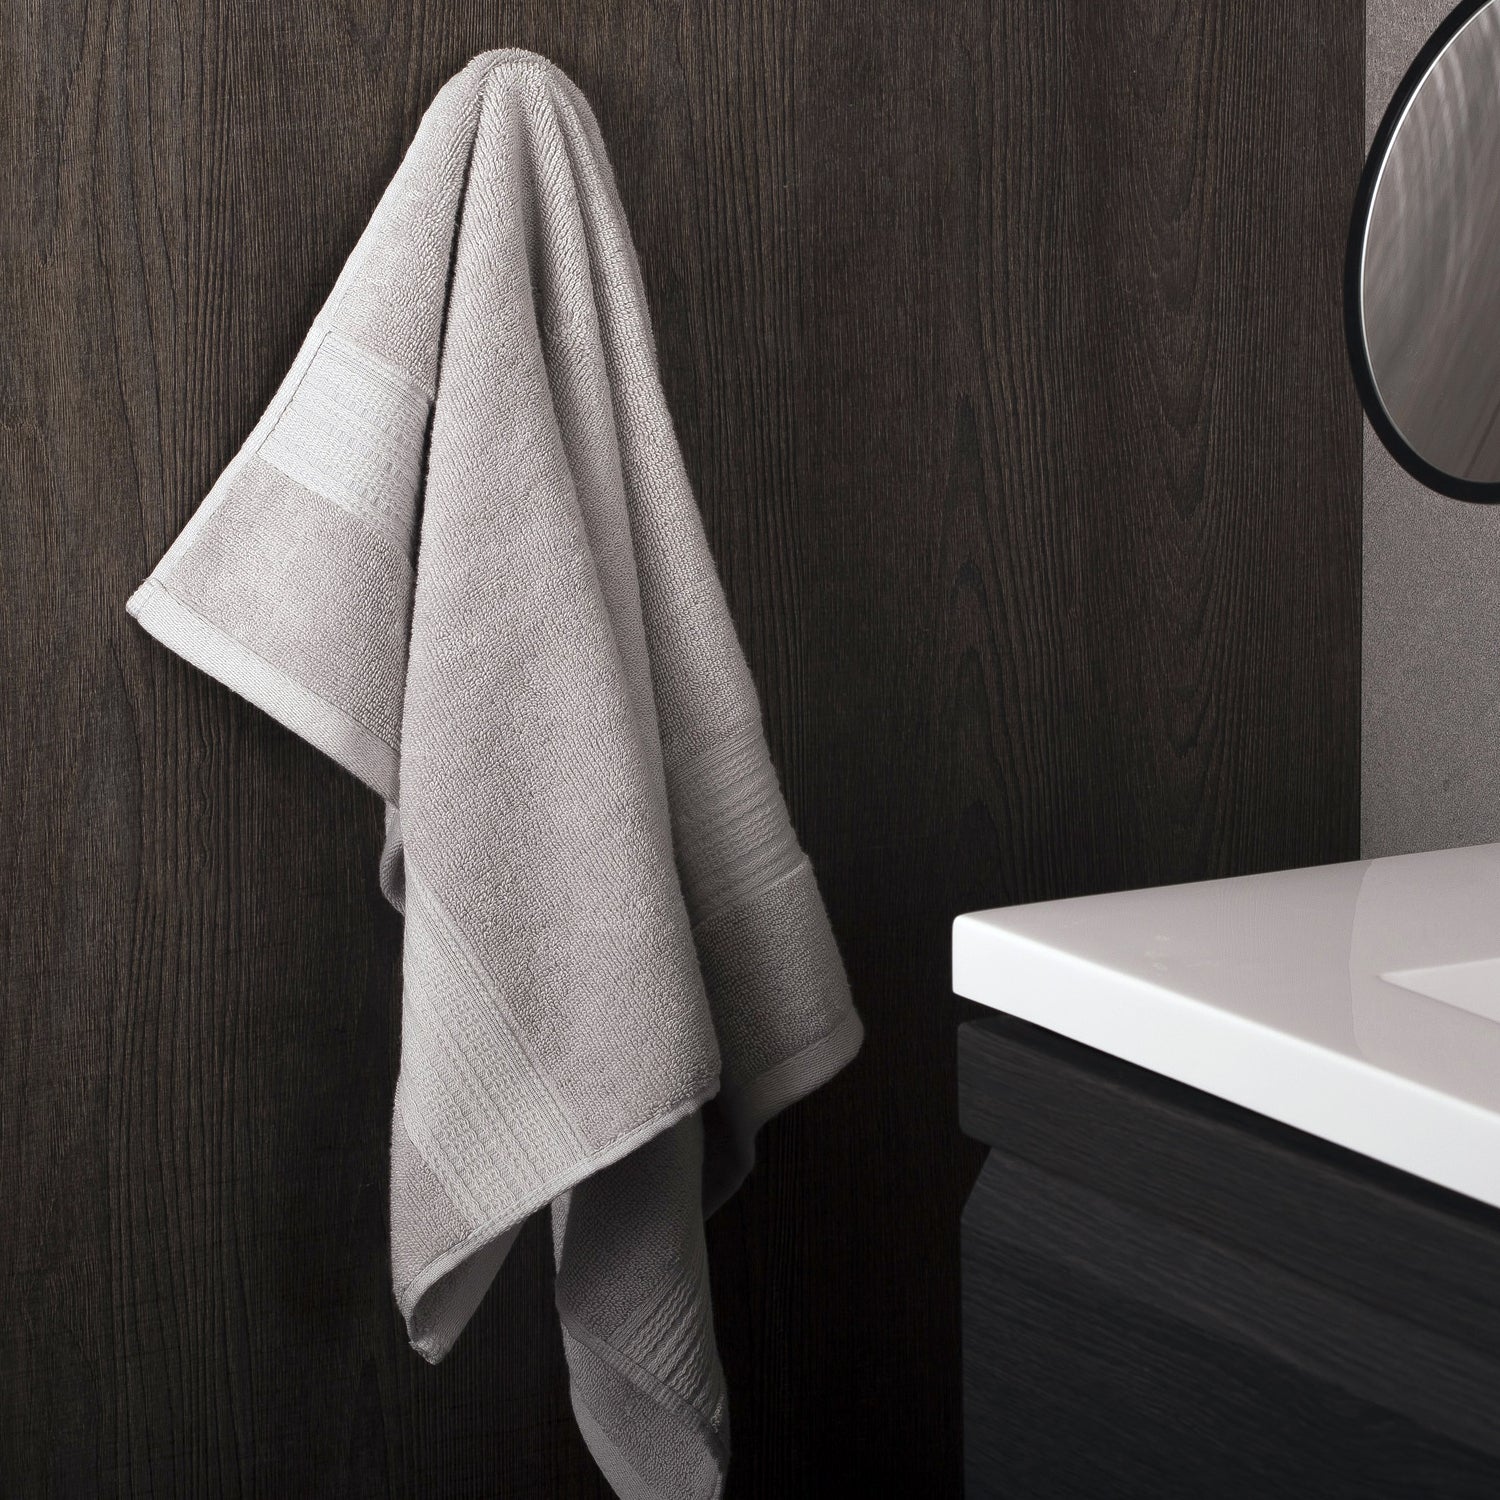 COSMIC Bathlife Single Bathroom Towel Hook, Wall Mount, Brass Body, Chrome Finish, 13/16 x 2-3/4 x 13/16 Inches (2290121)